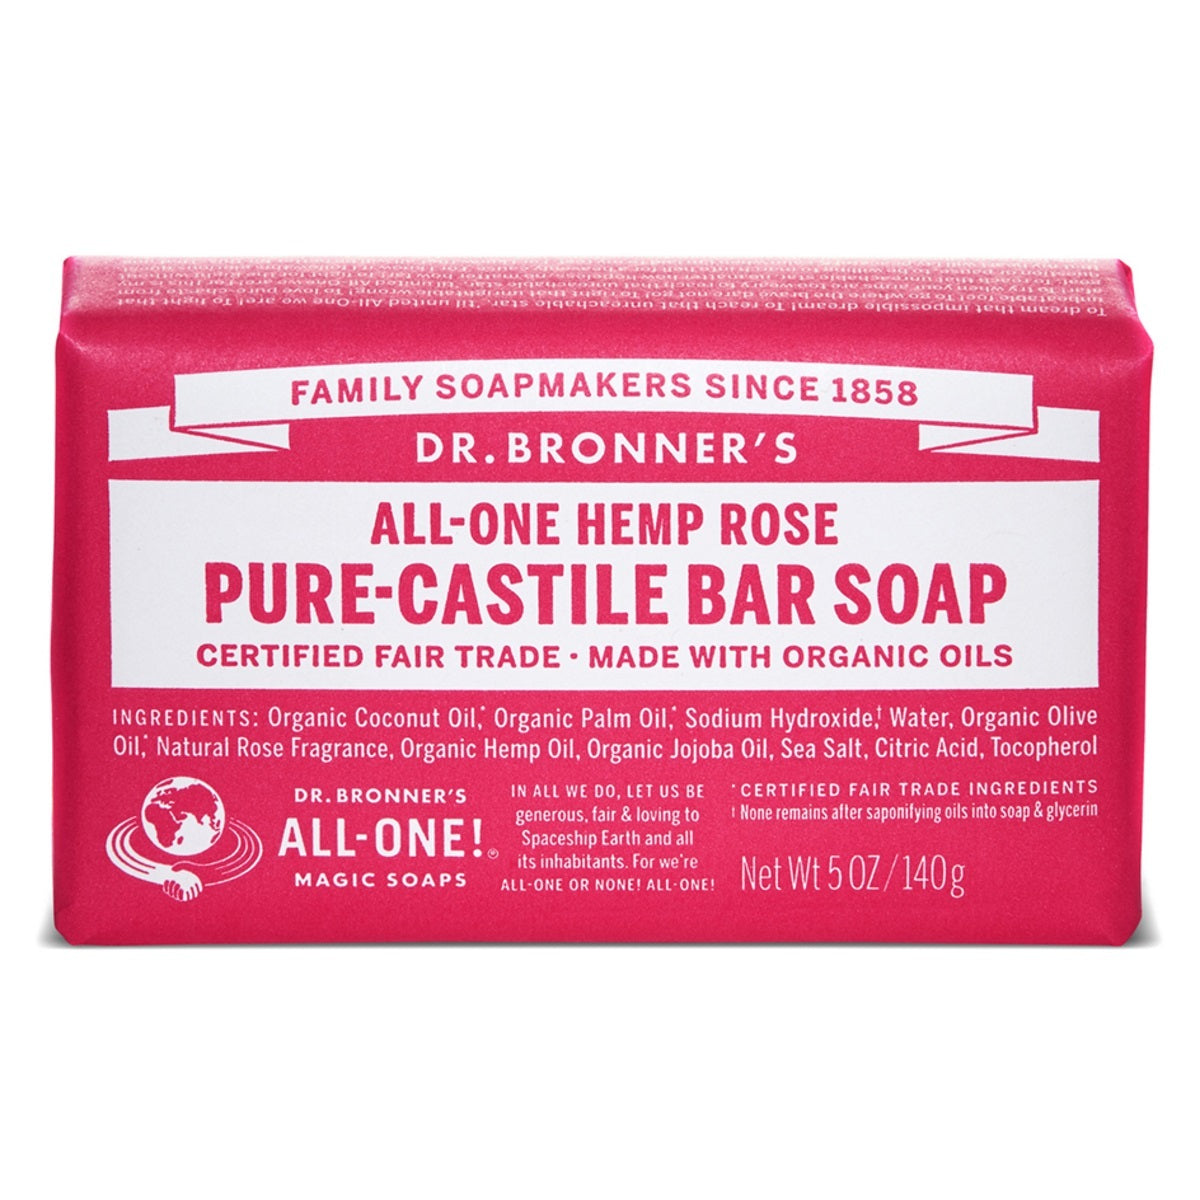 Primary image of Rose Castile Bar Soap